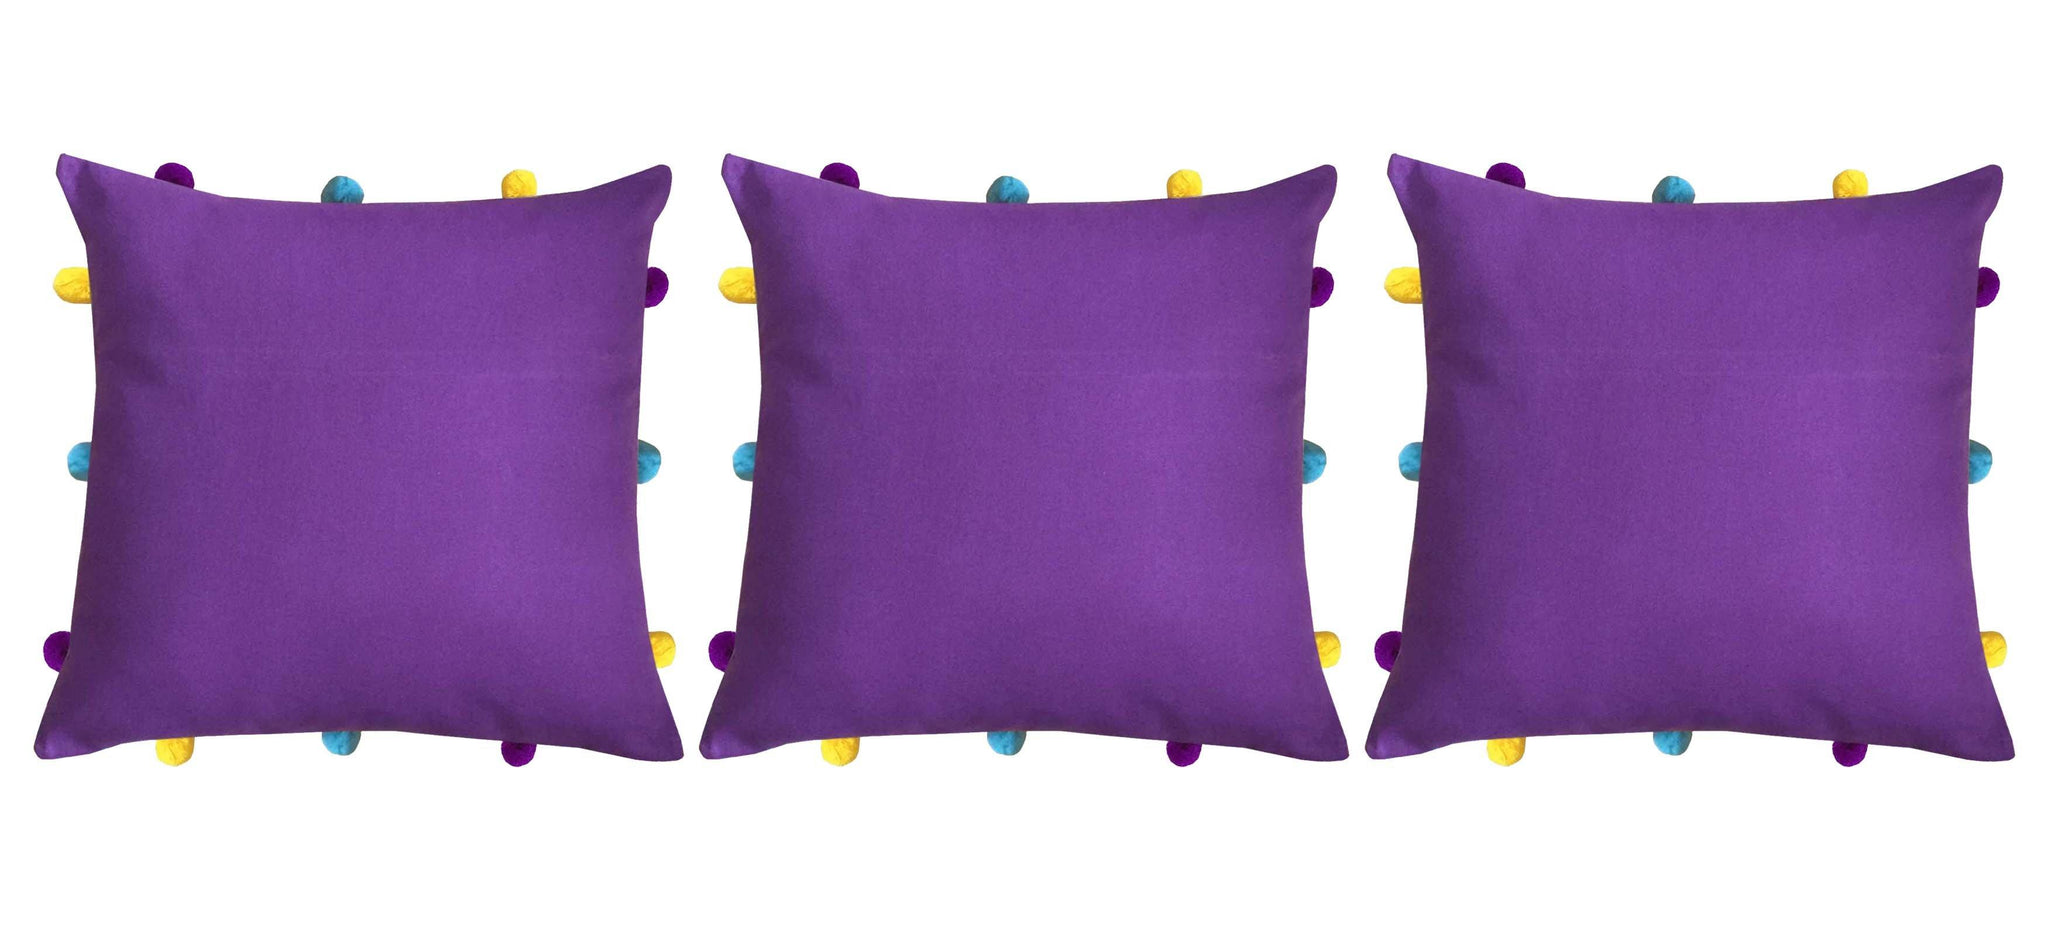 Lushomes Royal Lilac Cushion Cover with Colorful pom poms (3 pcs, 12 x 12”) - Lushomes